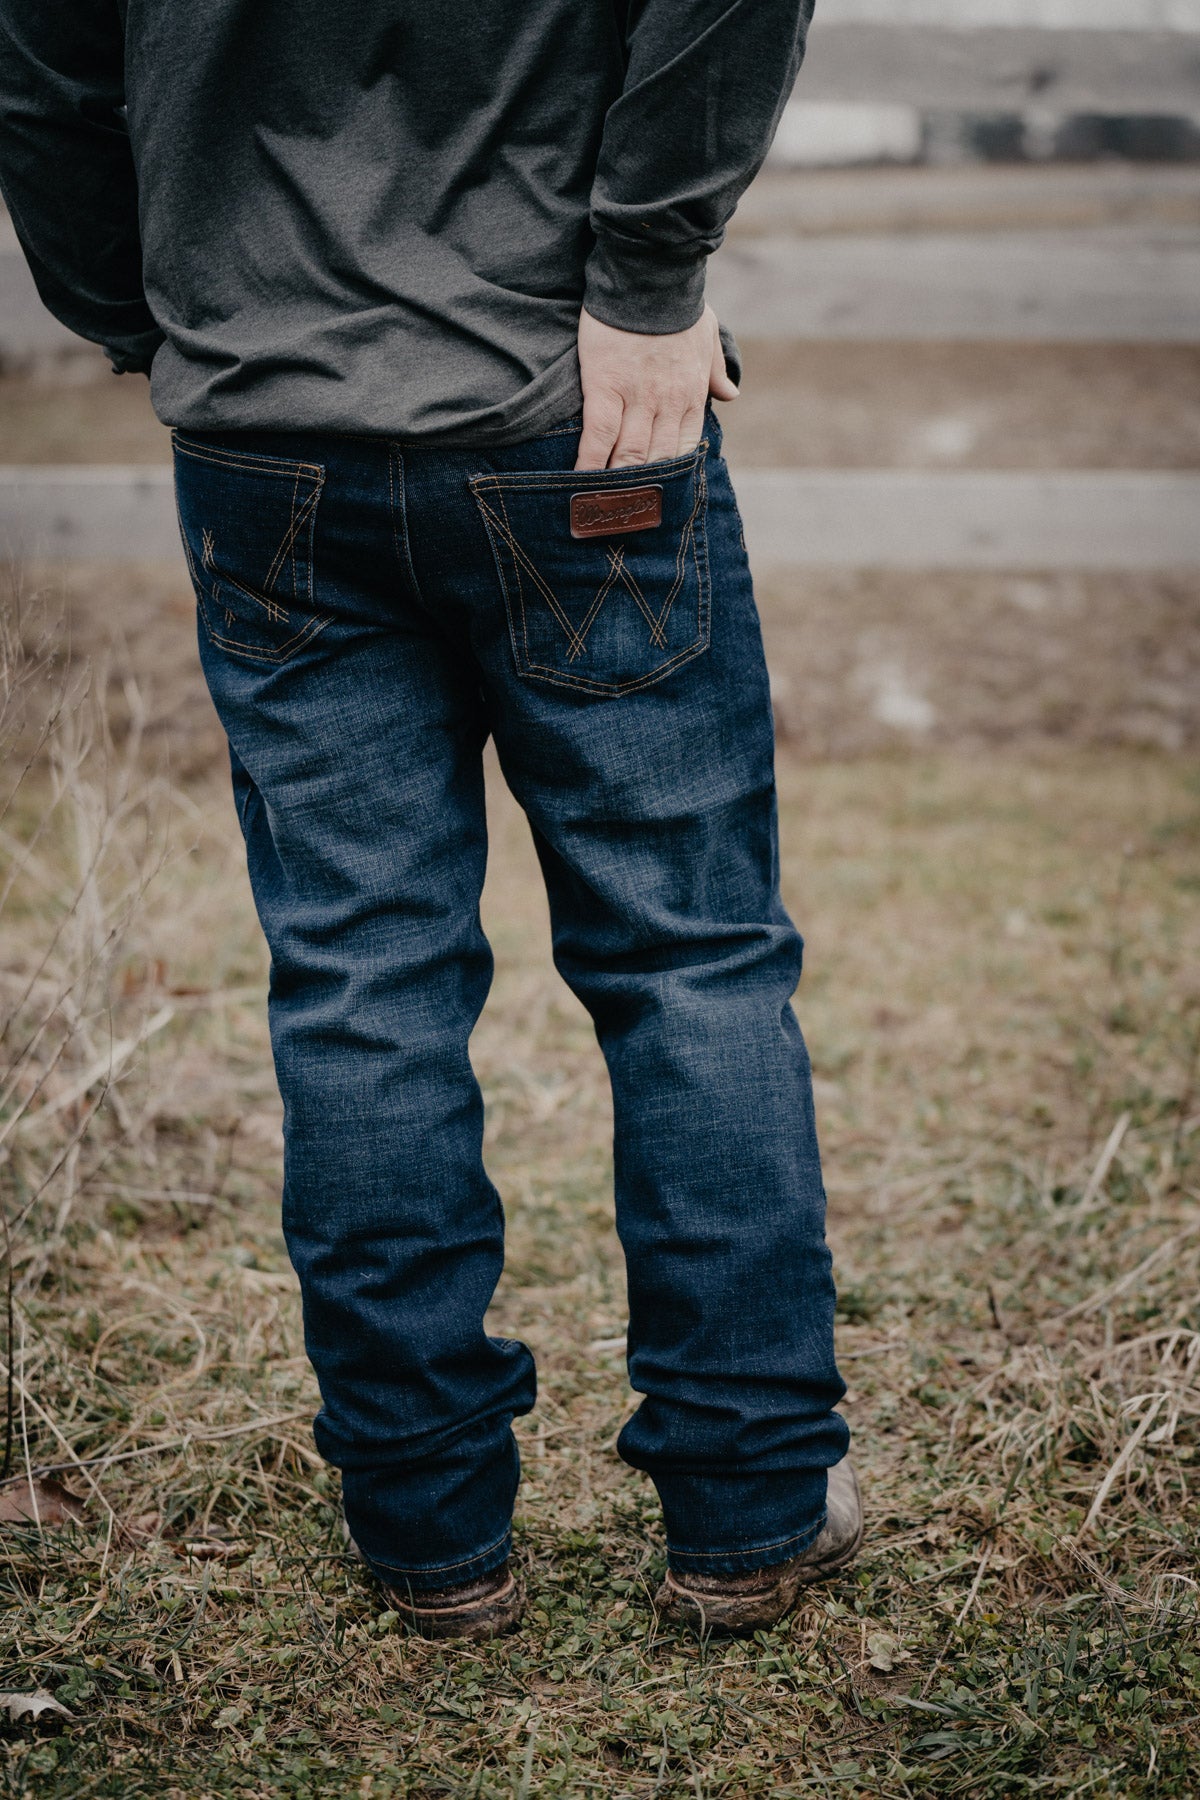 Men's Retro Wrangler Slim Bootcut Jeans (New Dark Wash)